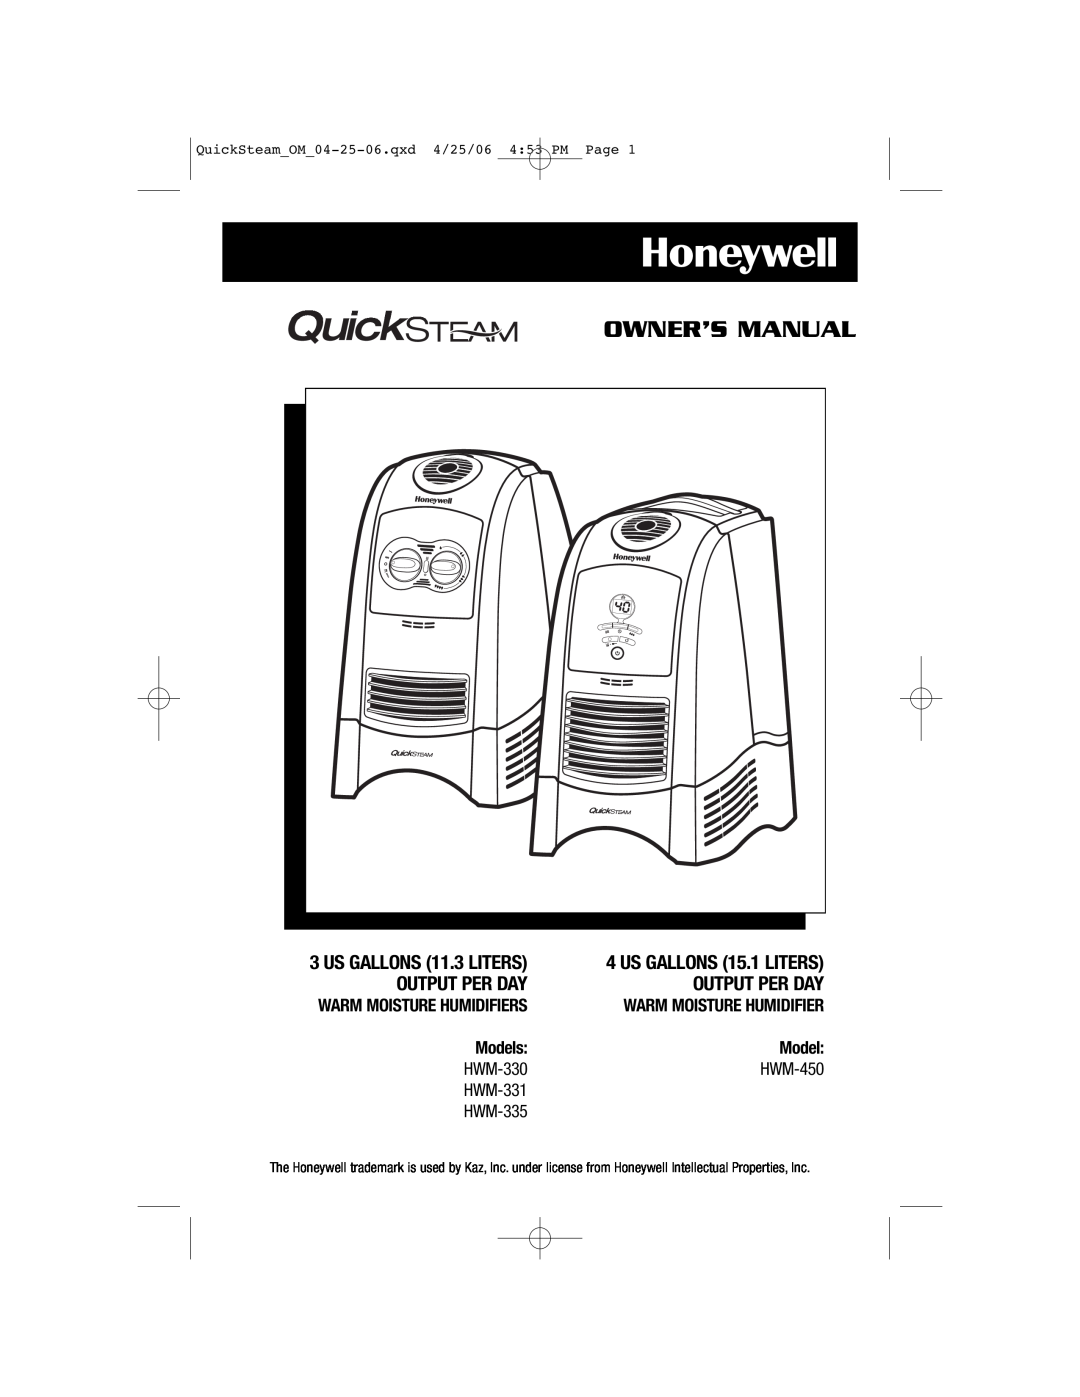 Honeywell HWM-335 owner manual Output Per Day, Models, HWM-330, HWM-450, HWM-331, Warm Moisture Humidifiers 